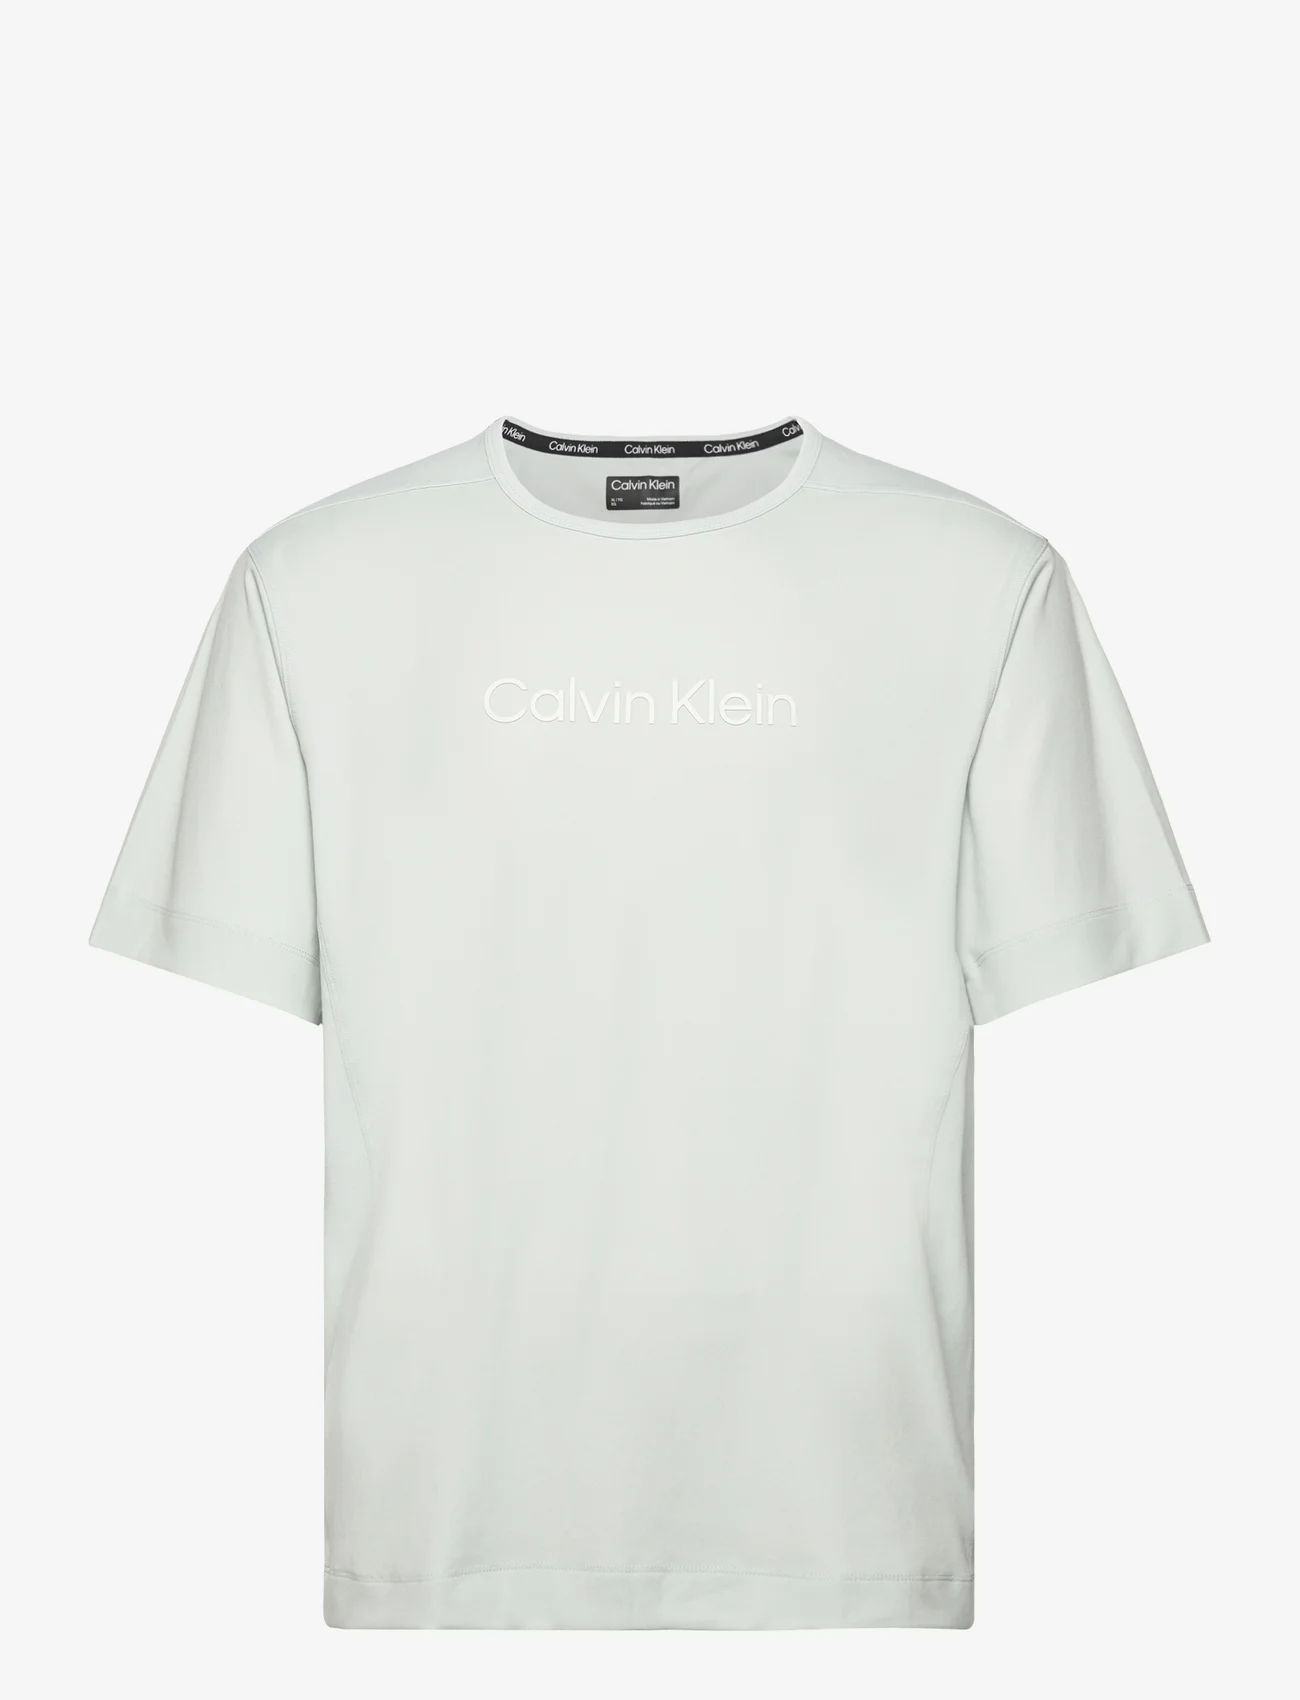 Calvin Klein Performance - WO - SS TEE - t-shirts - sky gray - 0